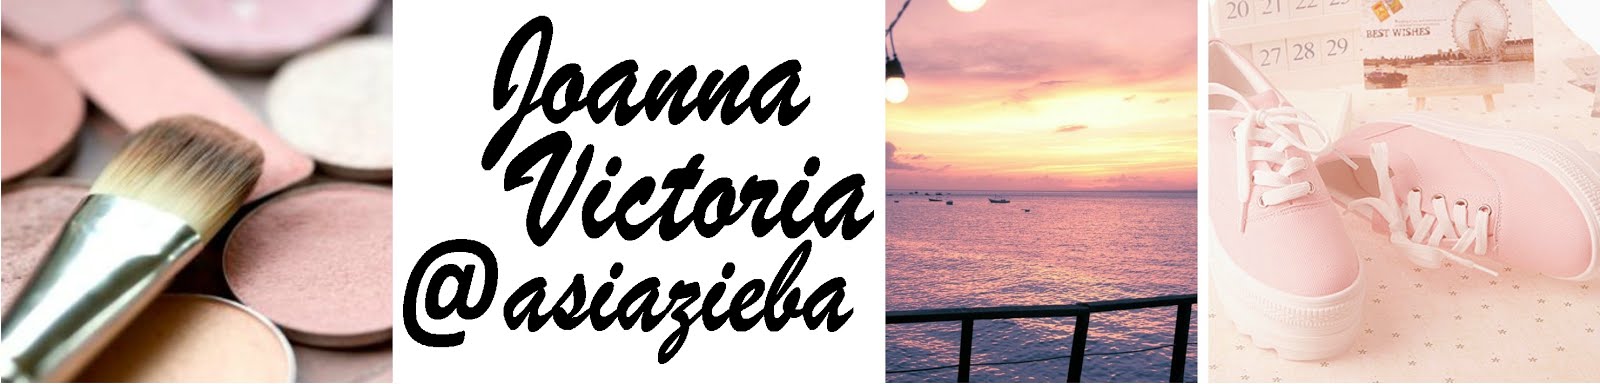 Joanna Victoria Blog